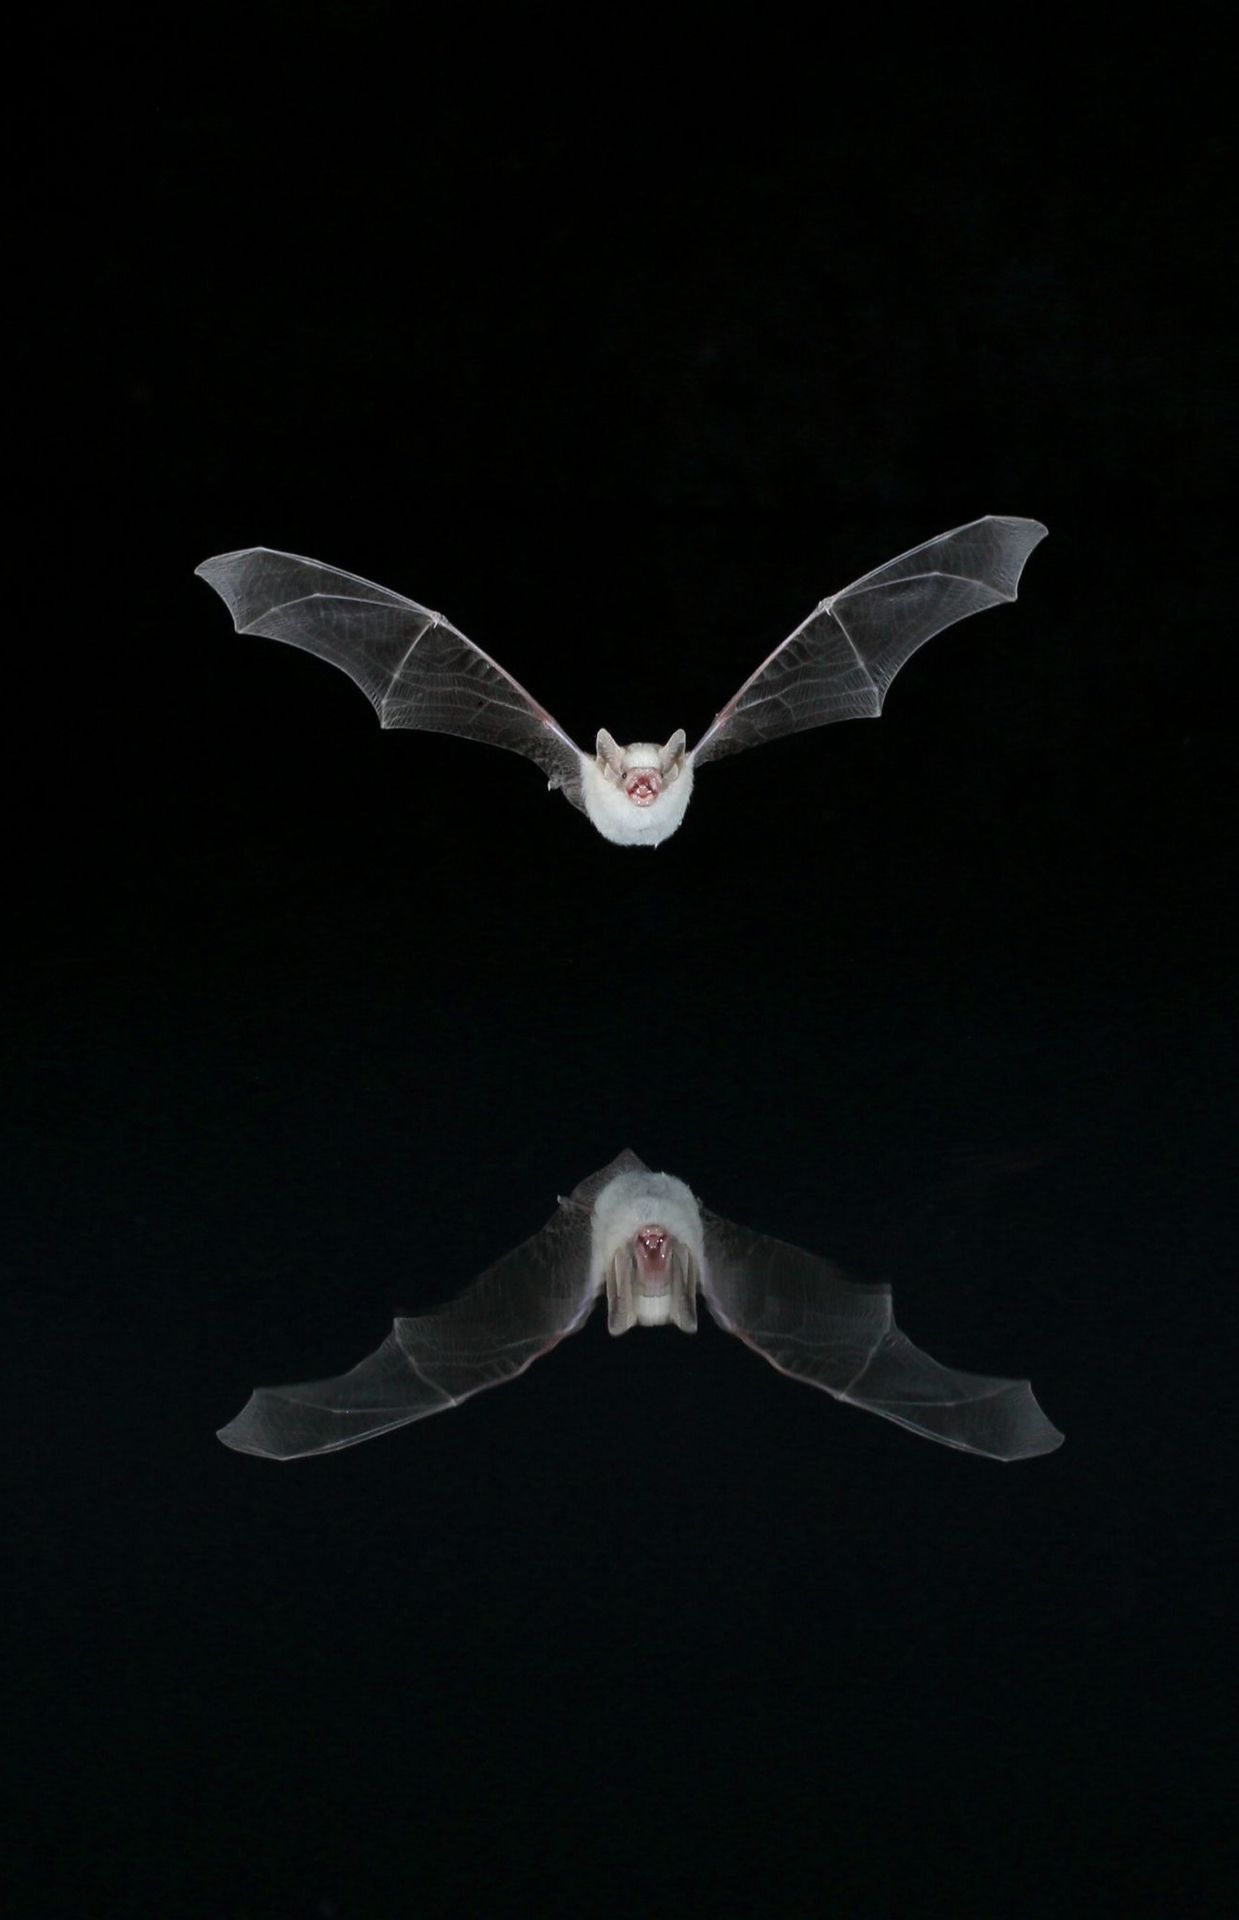 Flying bat reflecting in water at night